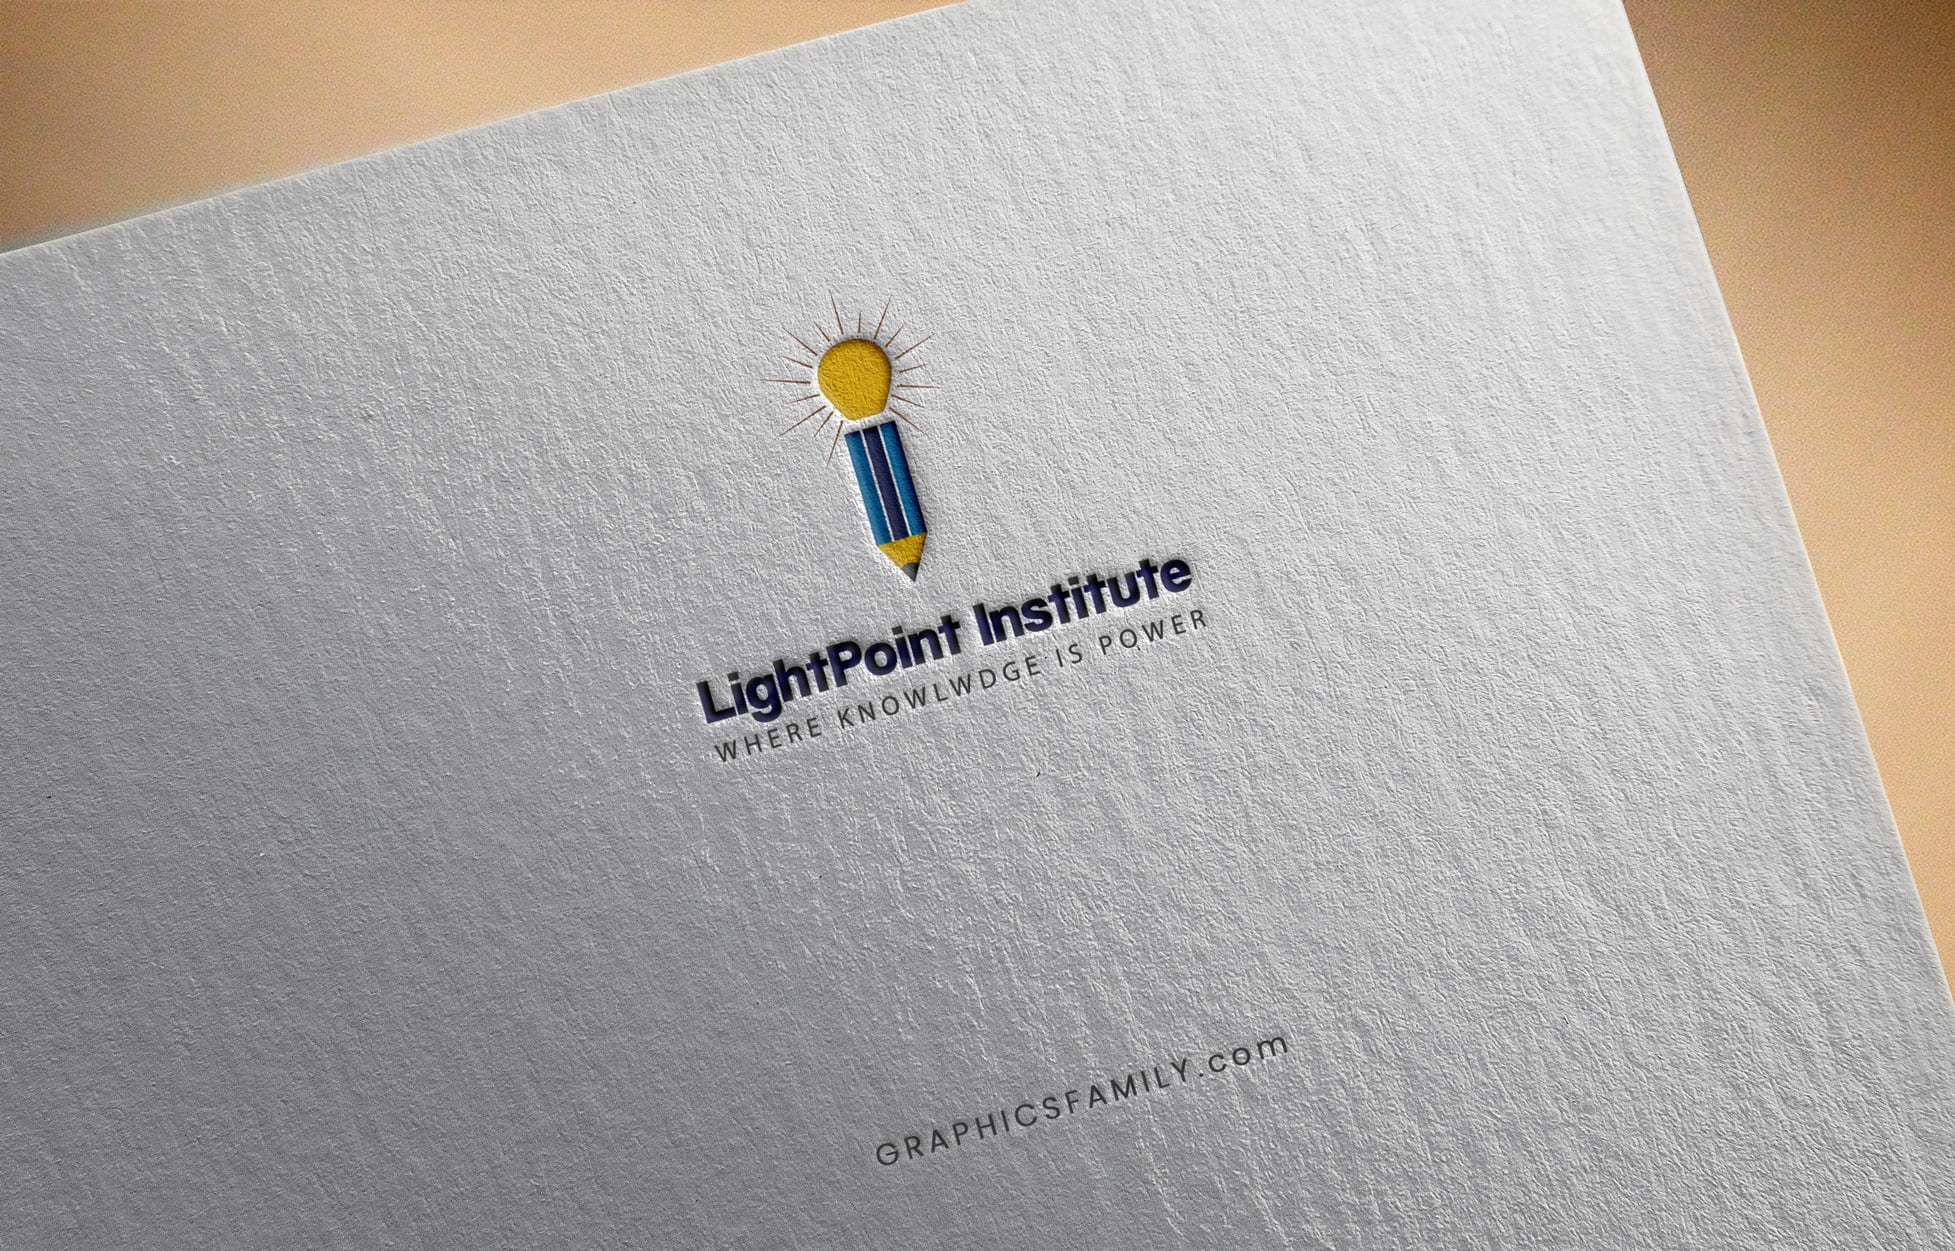 lightpoint-institute-logo-template